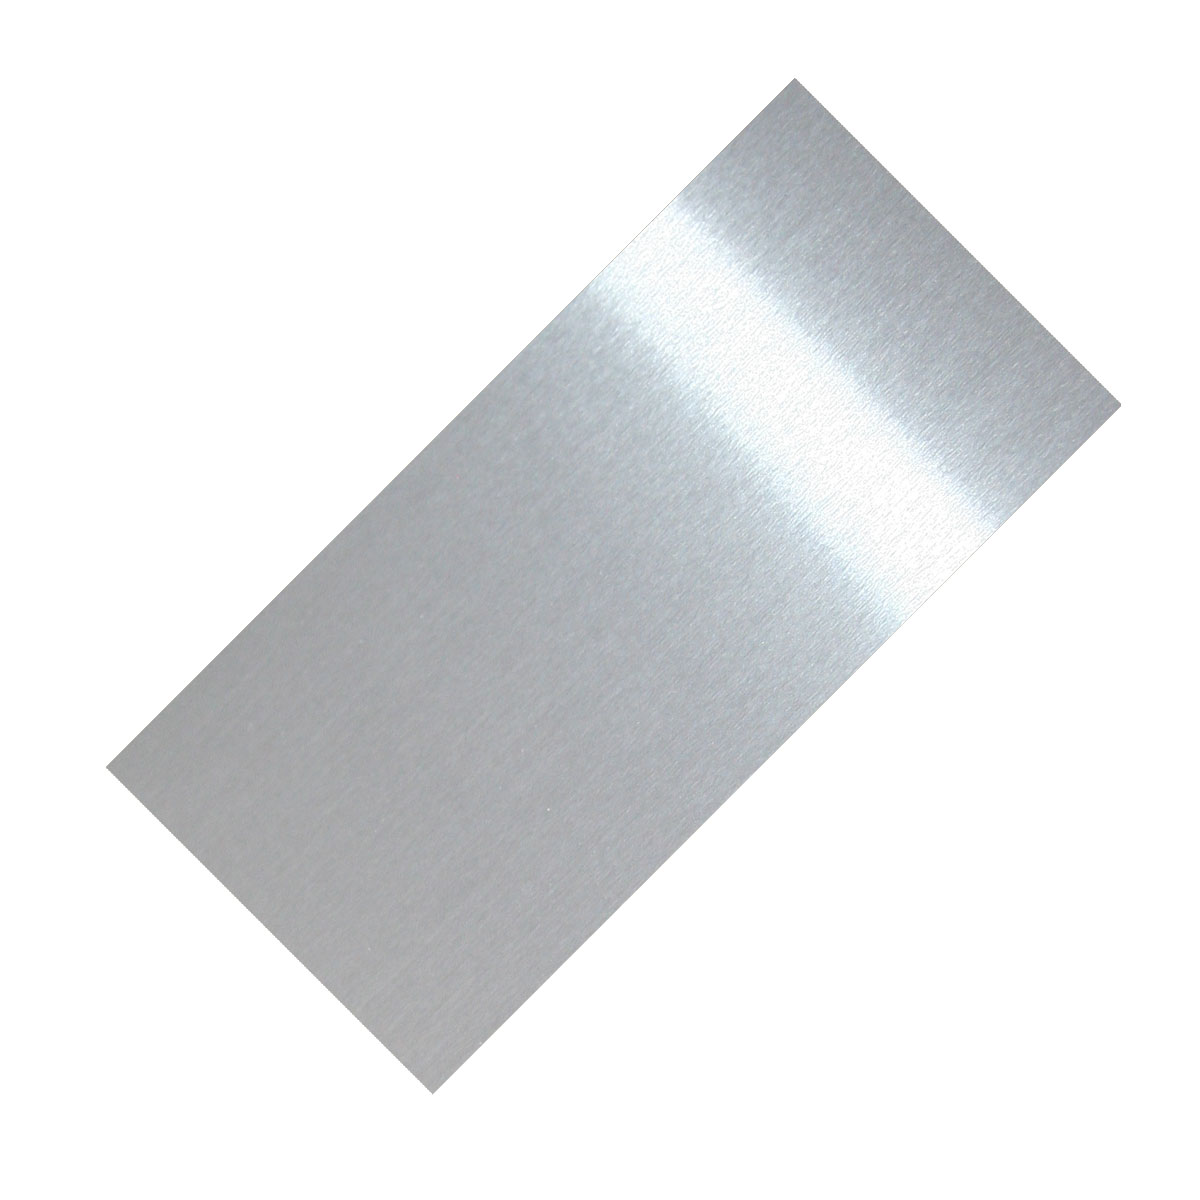 Semi-matte aluminium sheet for sublimation overprint